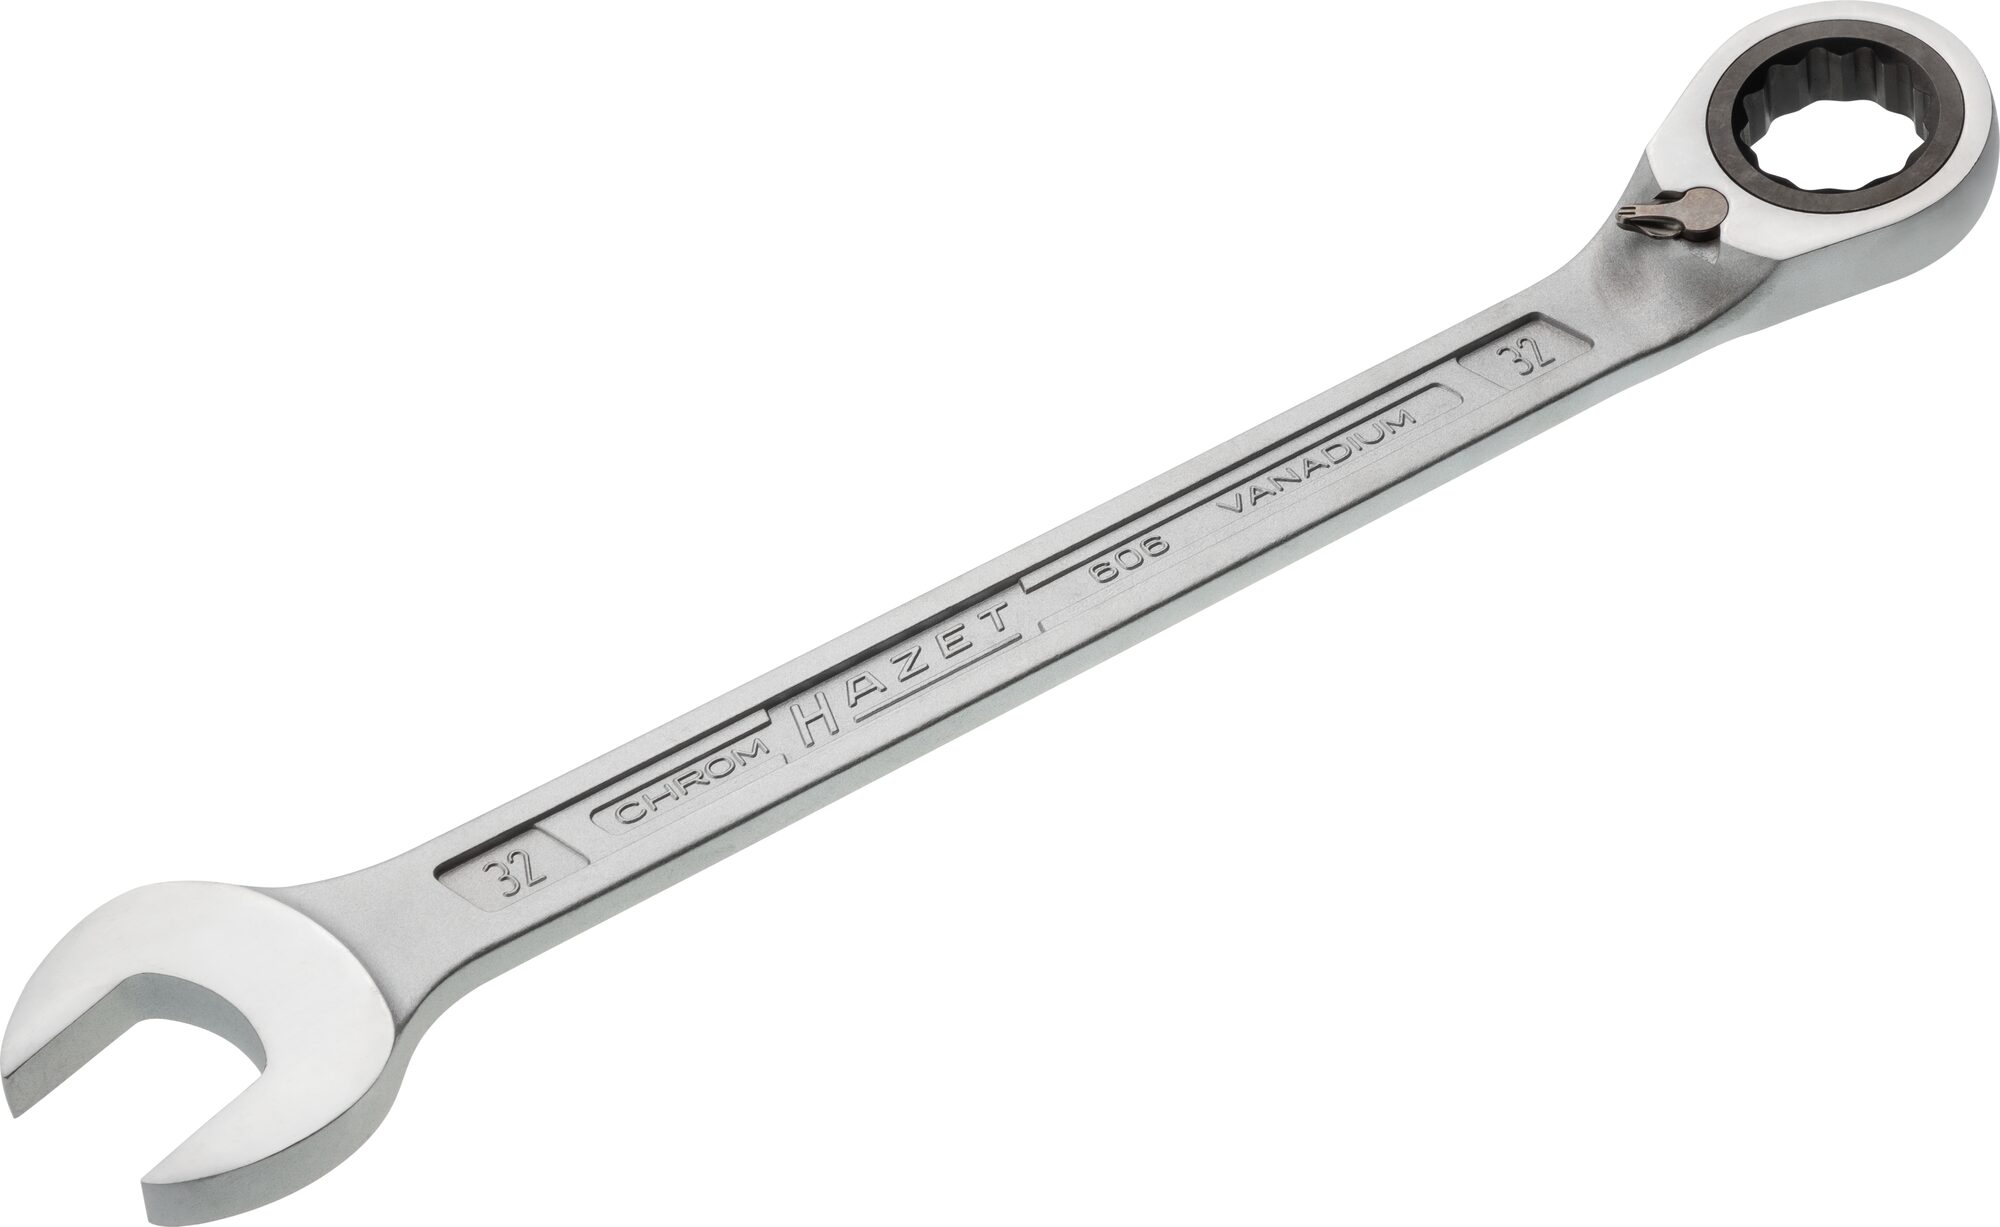 HAZET Knarren Ring-Maulschlüssel 606-32 · Außen Doppel-Sechskant-Tractionsprofil · 32 mm